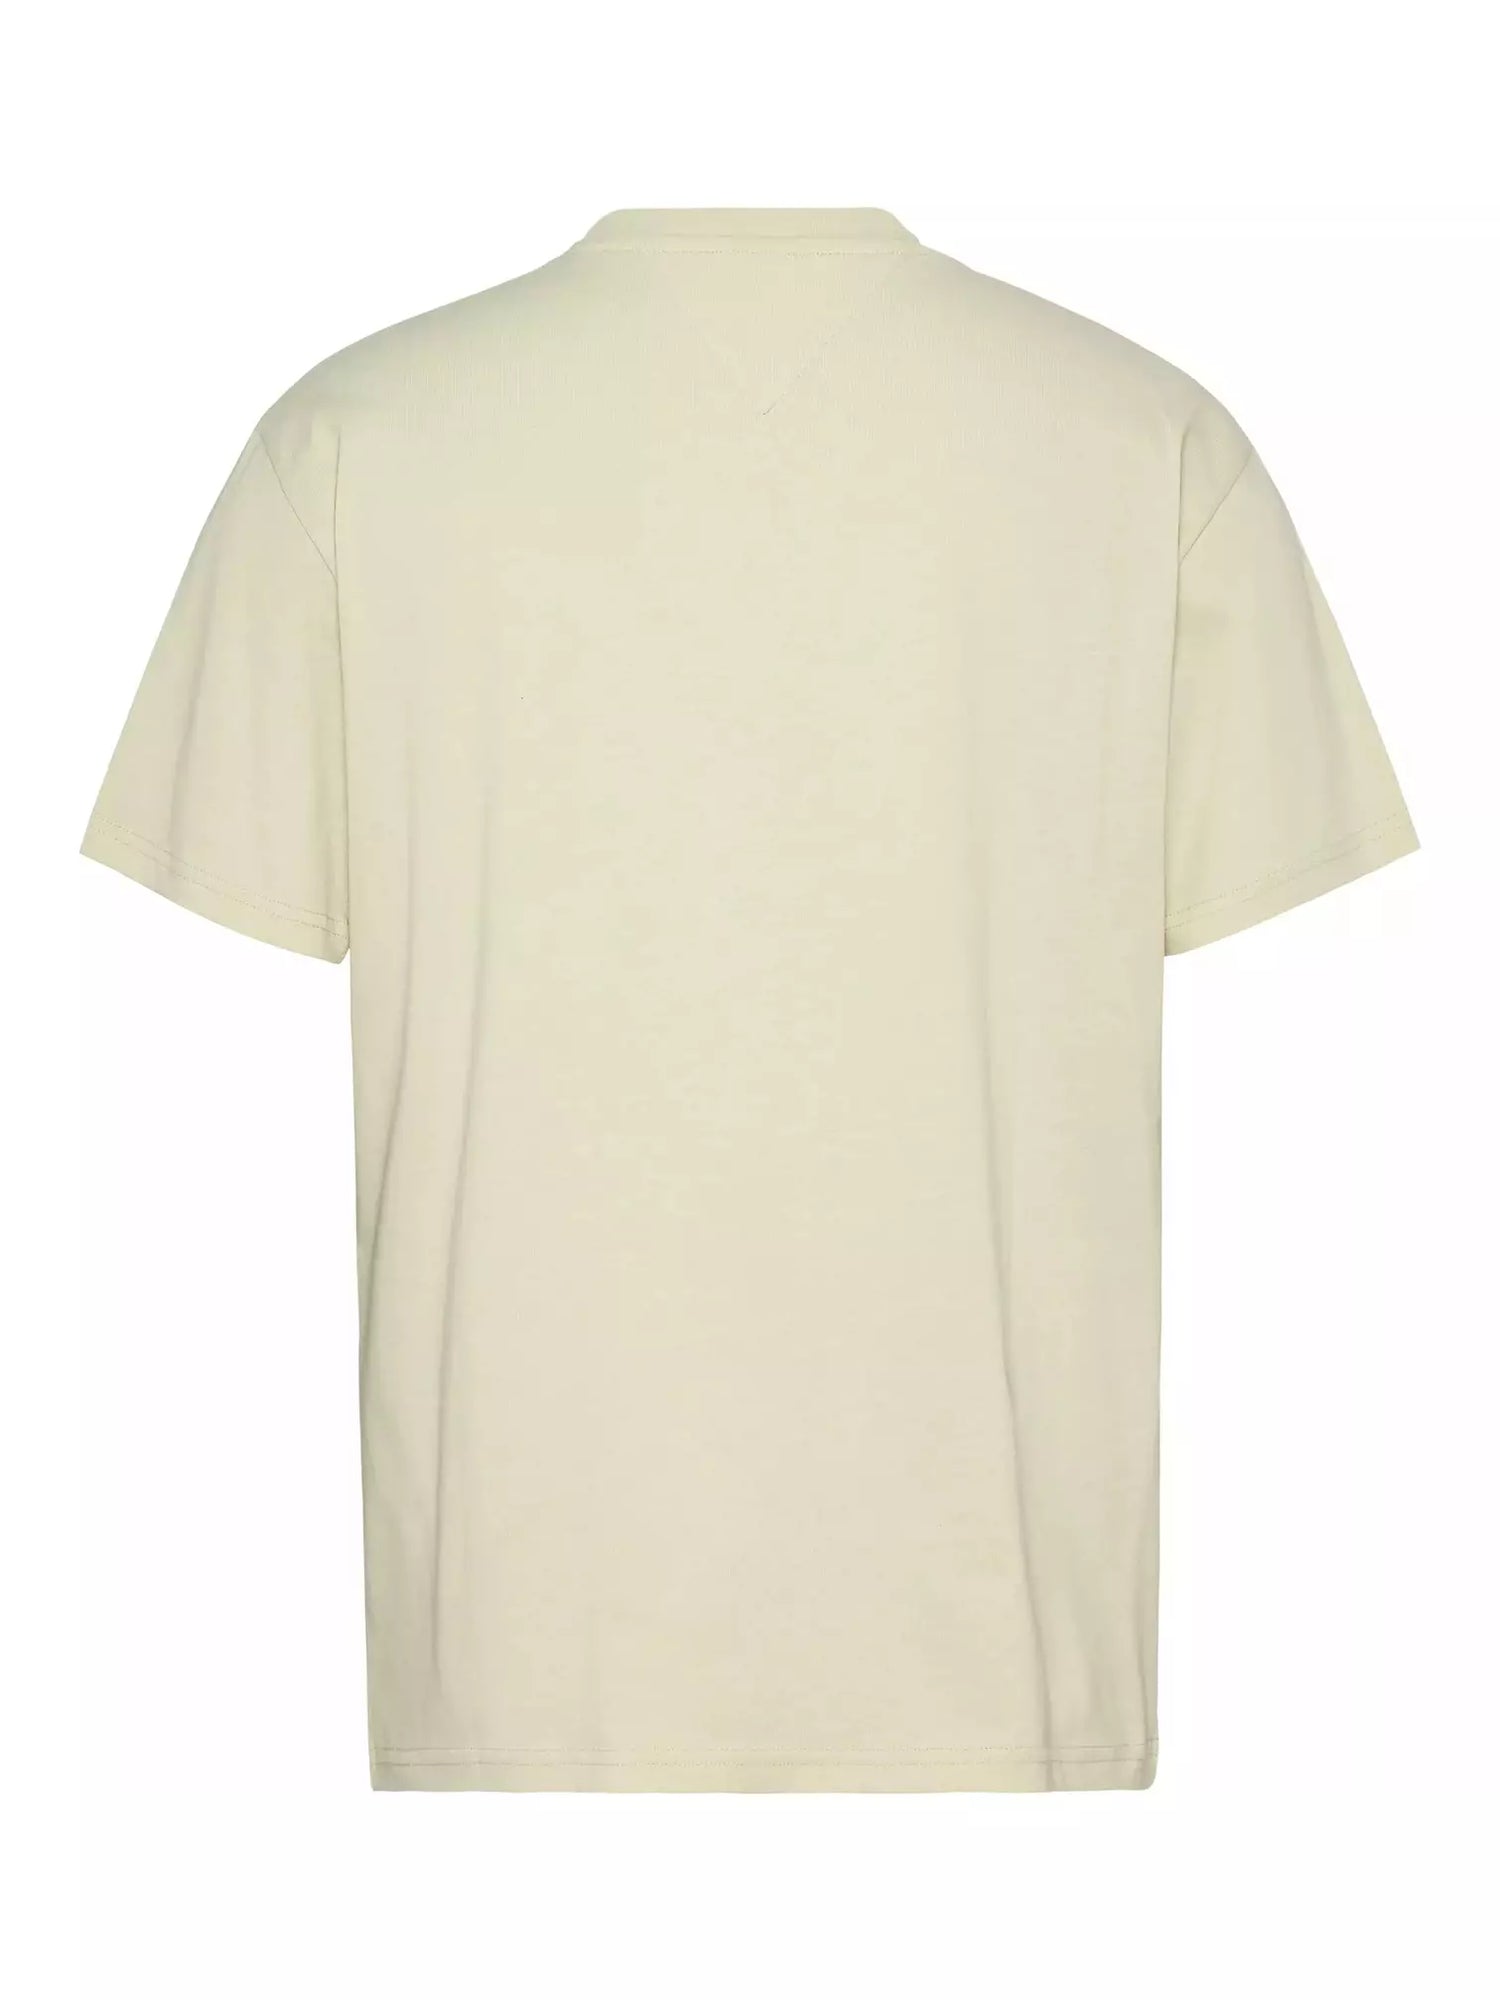 TJM Classic gold linear t-shirt - Beige